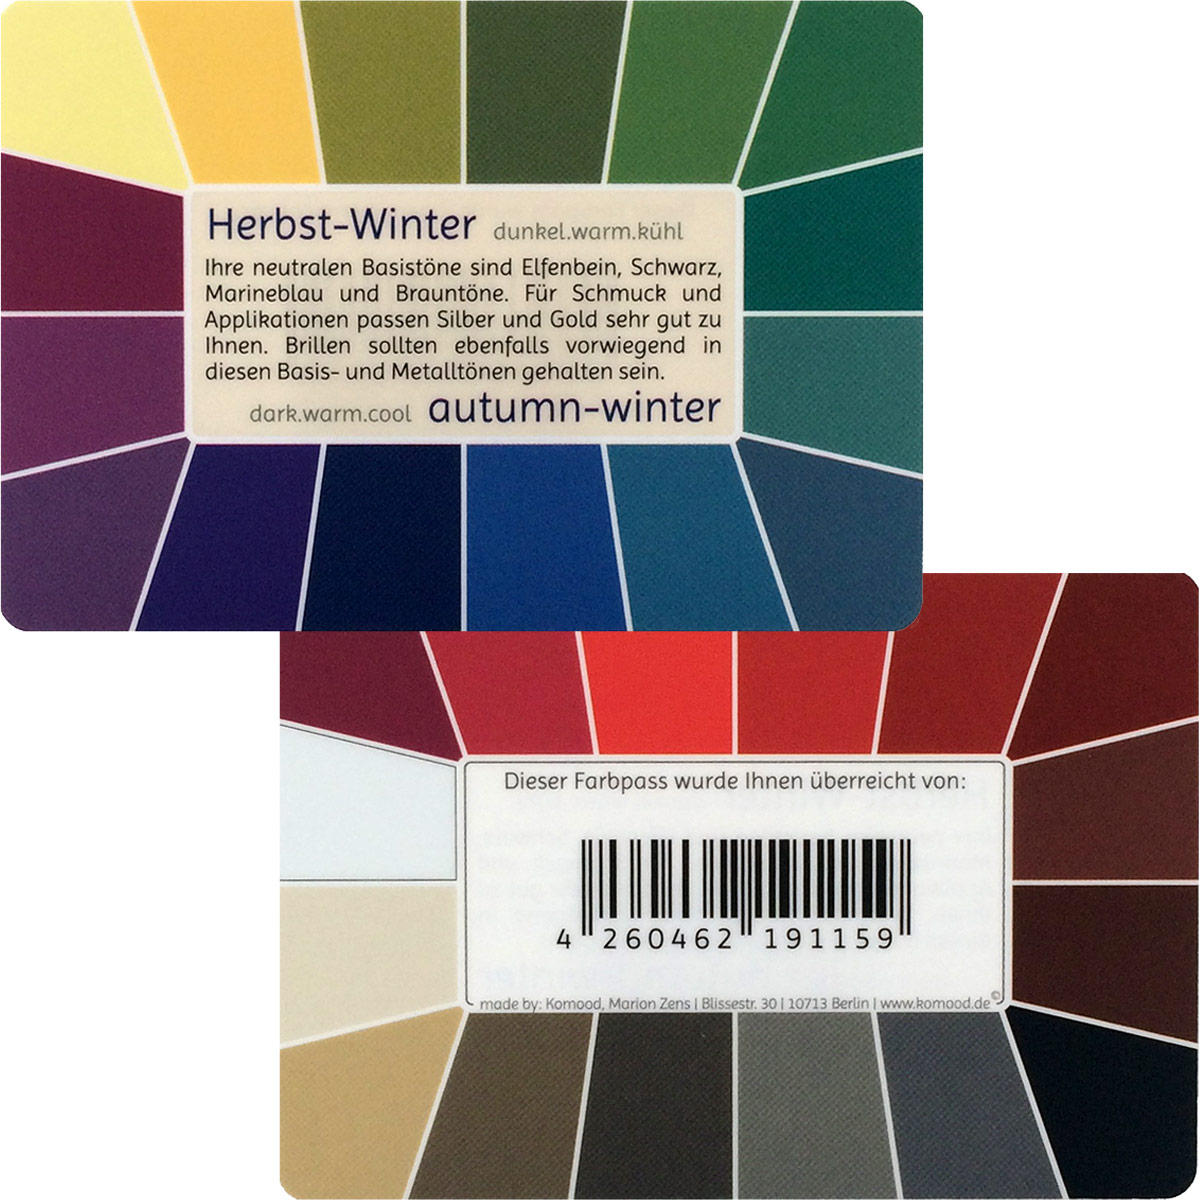 Farbpass Herbst-Winter - Memo, 32 Farben